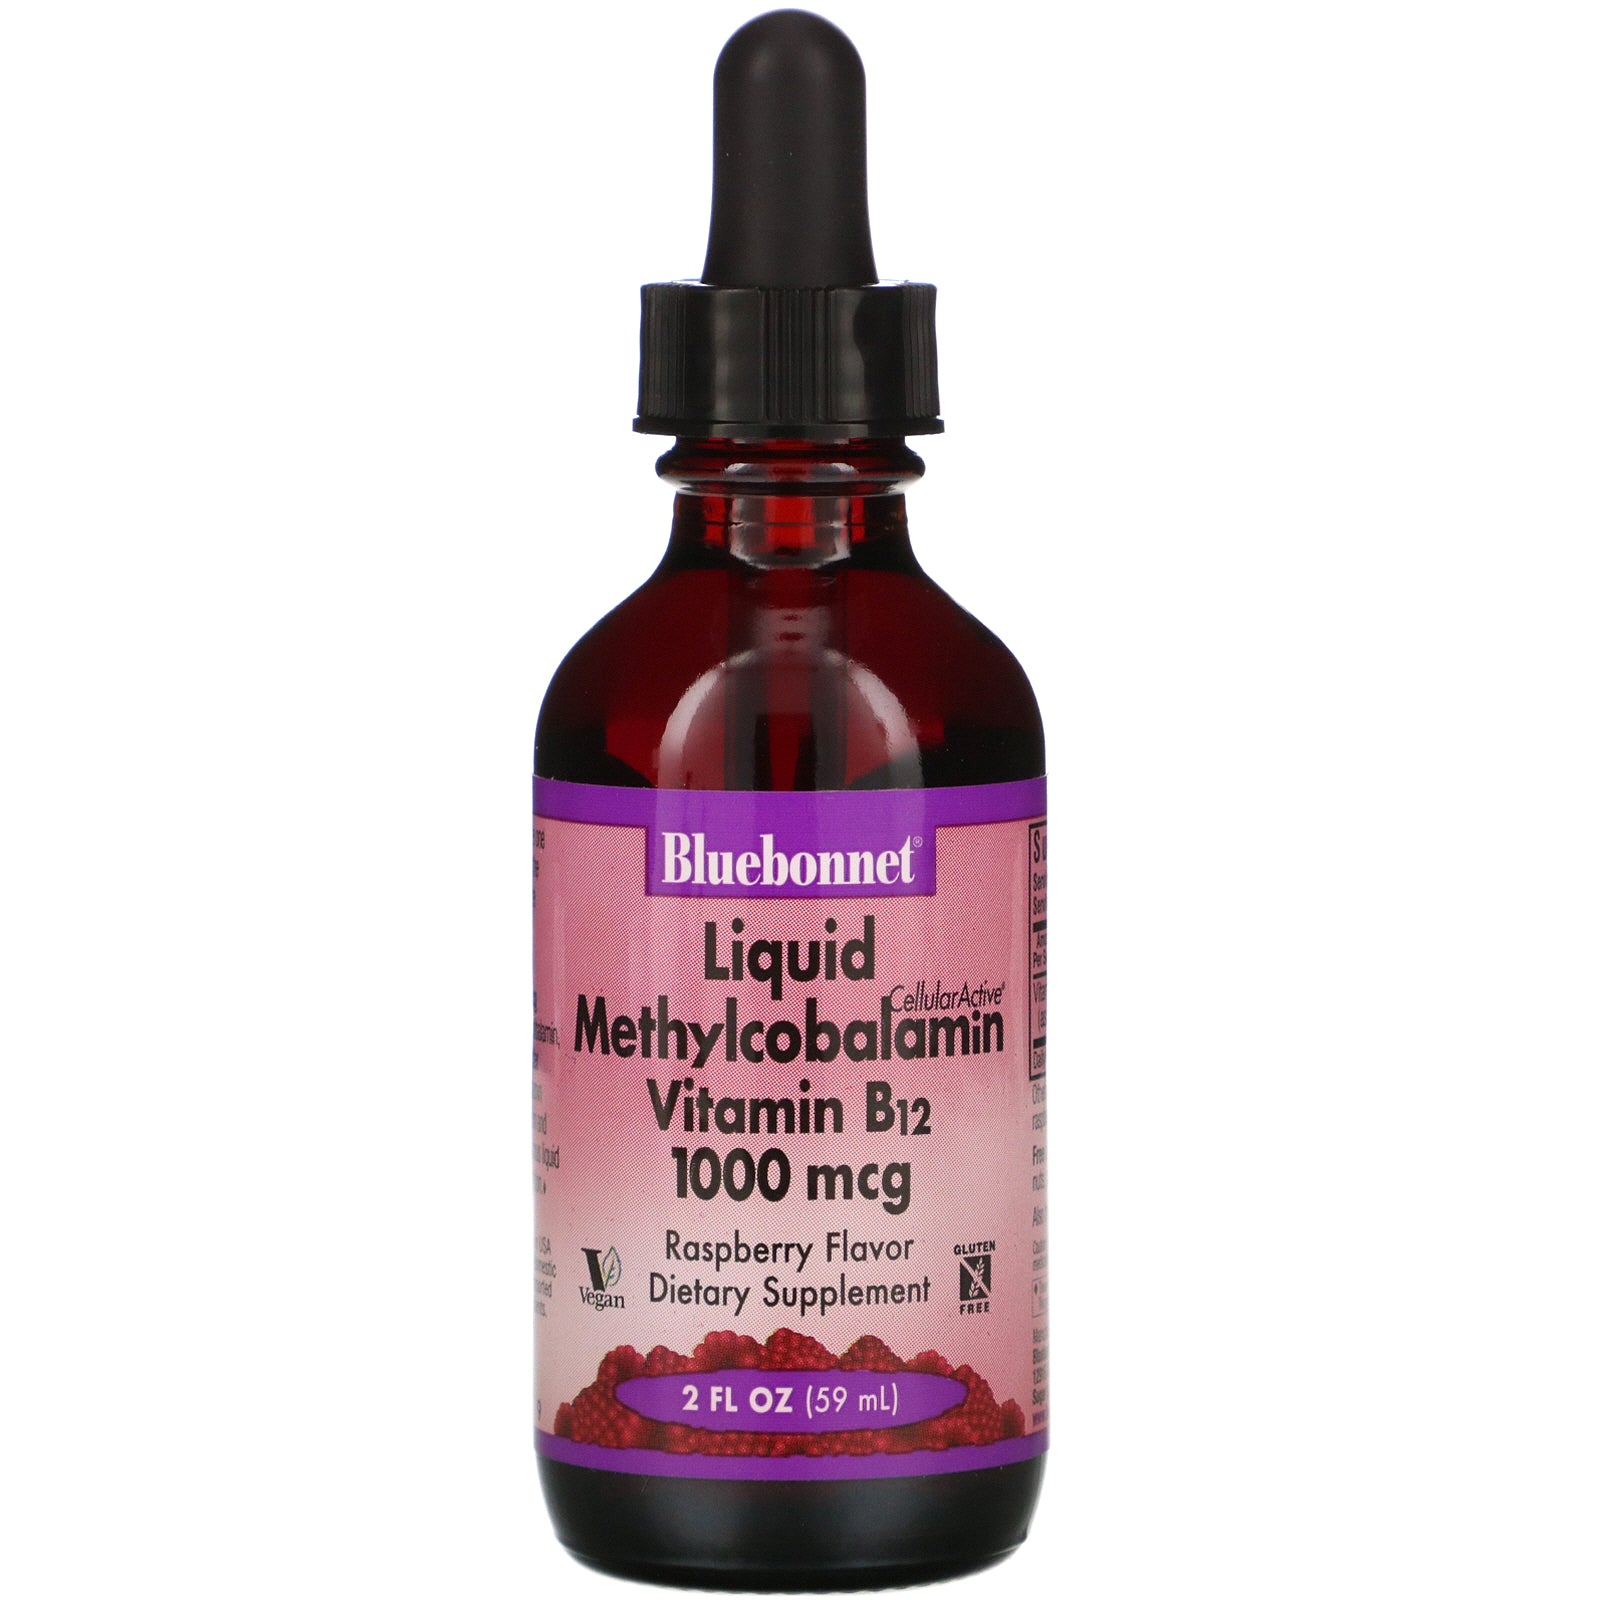 Bluebonnet Nutrition, Liquid CelluarActive Methylcobalamin Vitamin B12, Raspberry Flavor, 1,000 mcg, 2 fl oz (59 ml)